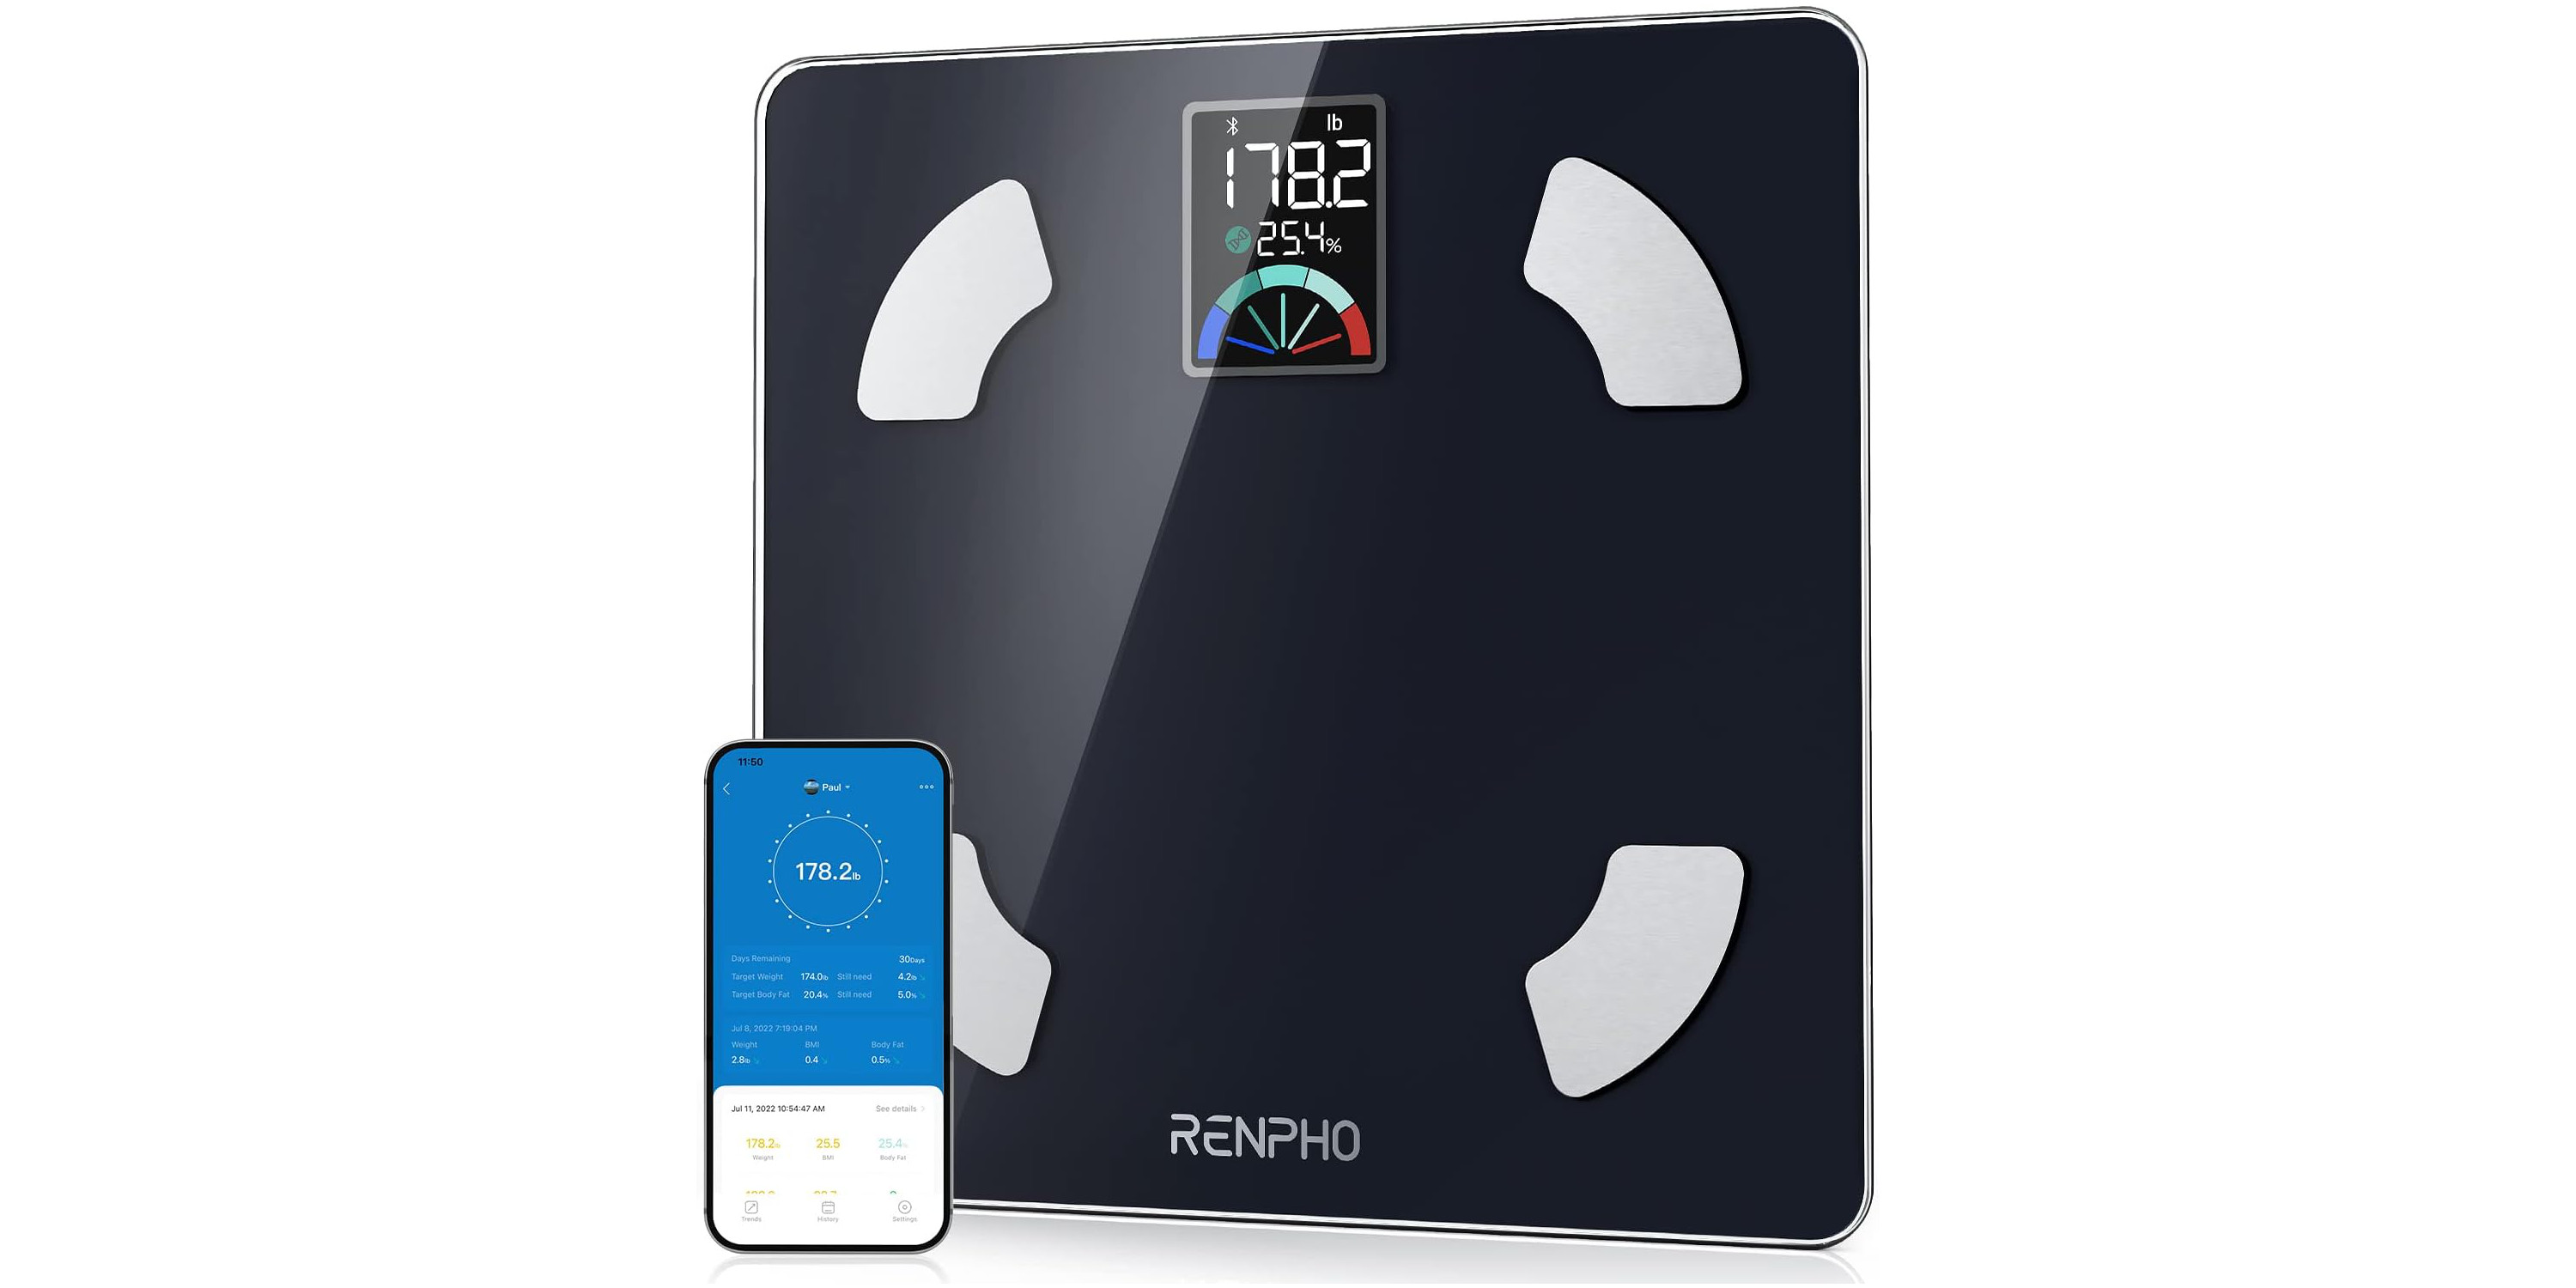 Best Smart WiFi Scale eufy P2 Pro Digital Bathroom Bluetooth Body Weight  Scale HOW TO SETUP 